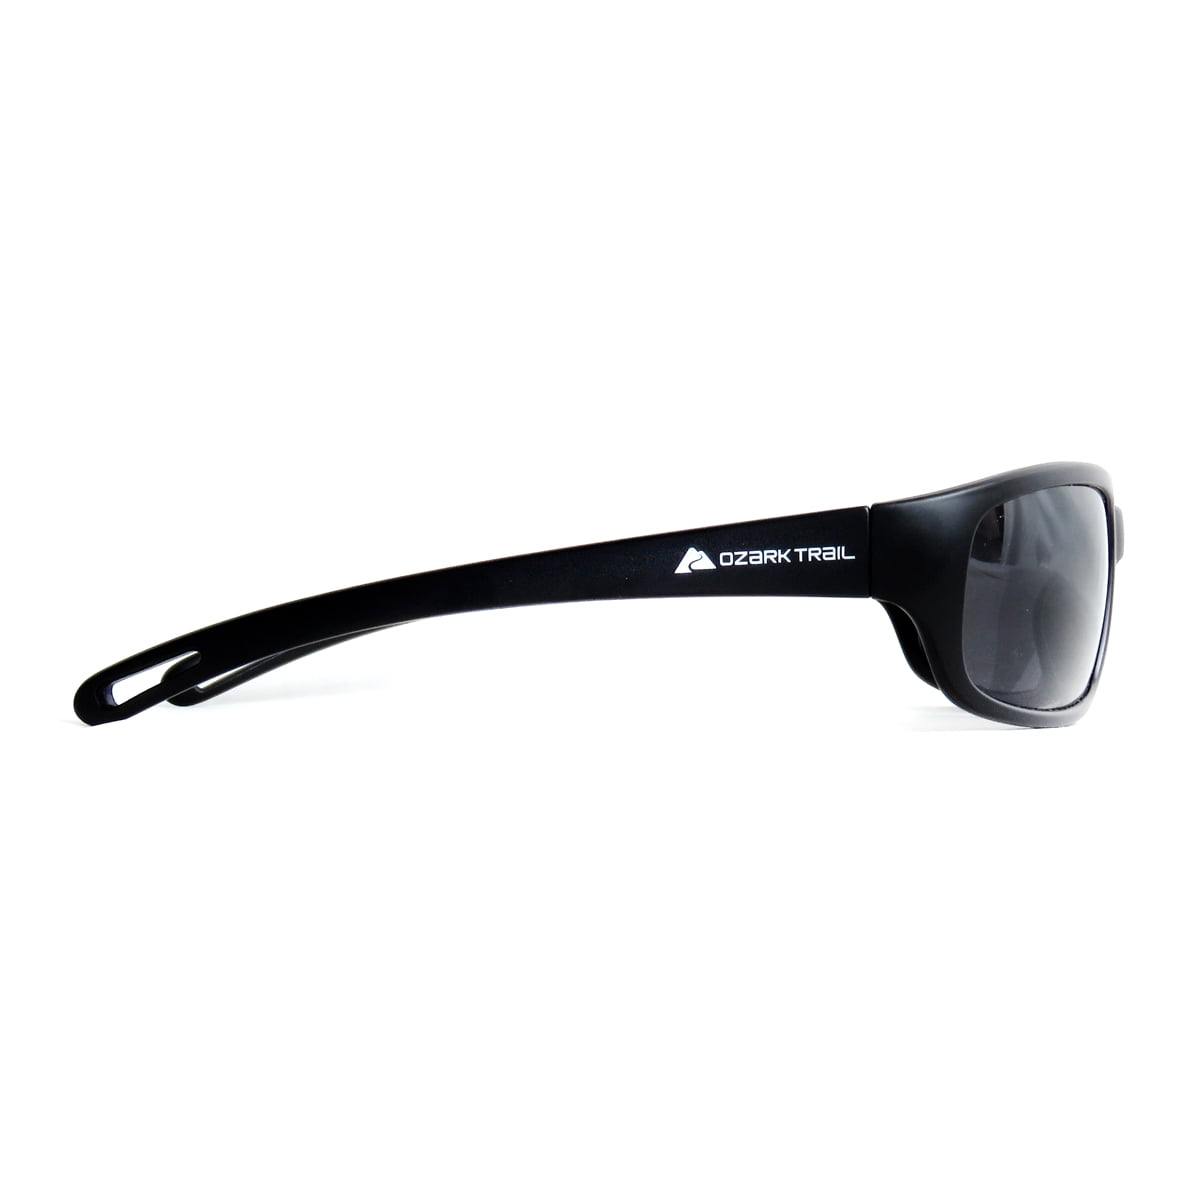 Ozark Trail Men's Polarized Fishing Sunglasses Camo Framed - Each